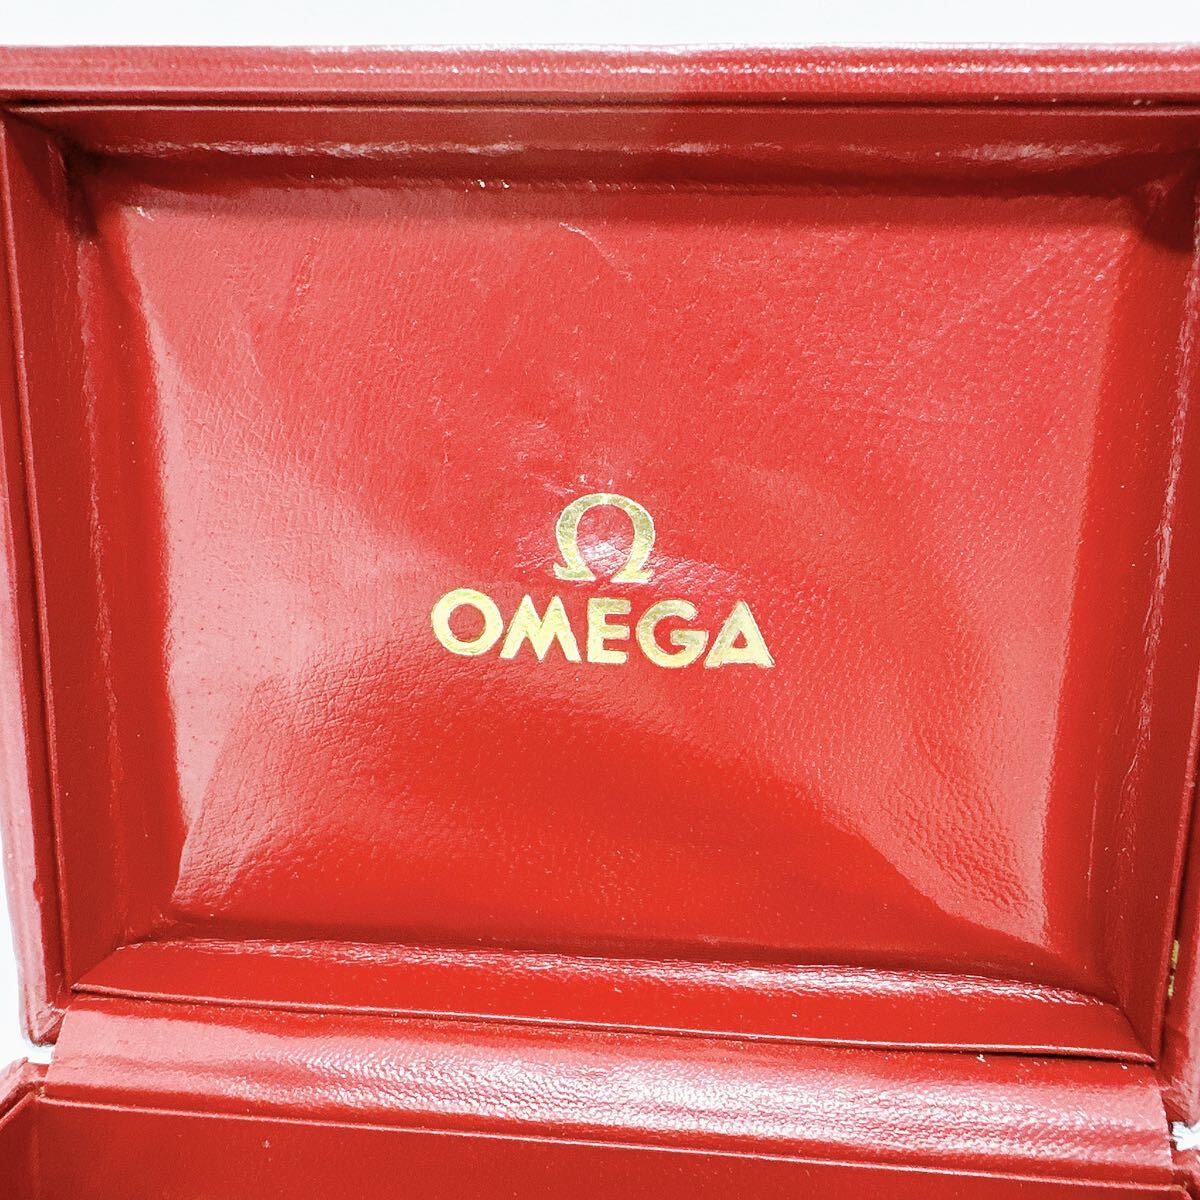 0406c オメガ OMEGA 箱 空箱 ケース ボックス 純正 腕時計 ヴィンテージ アンティーク